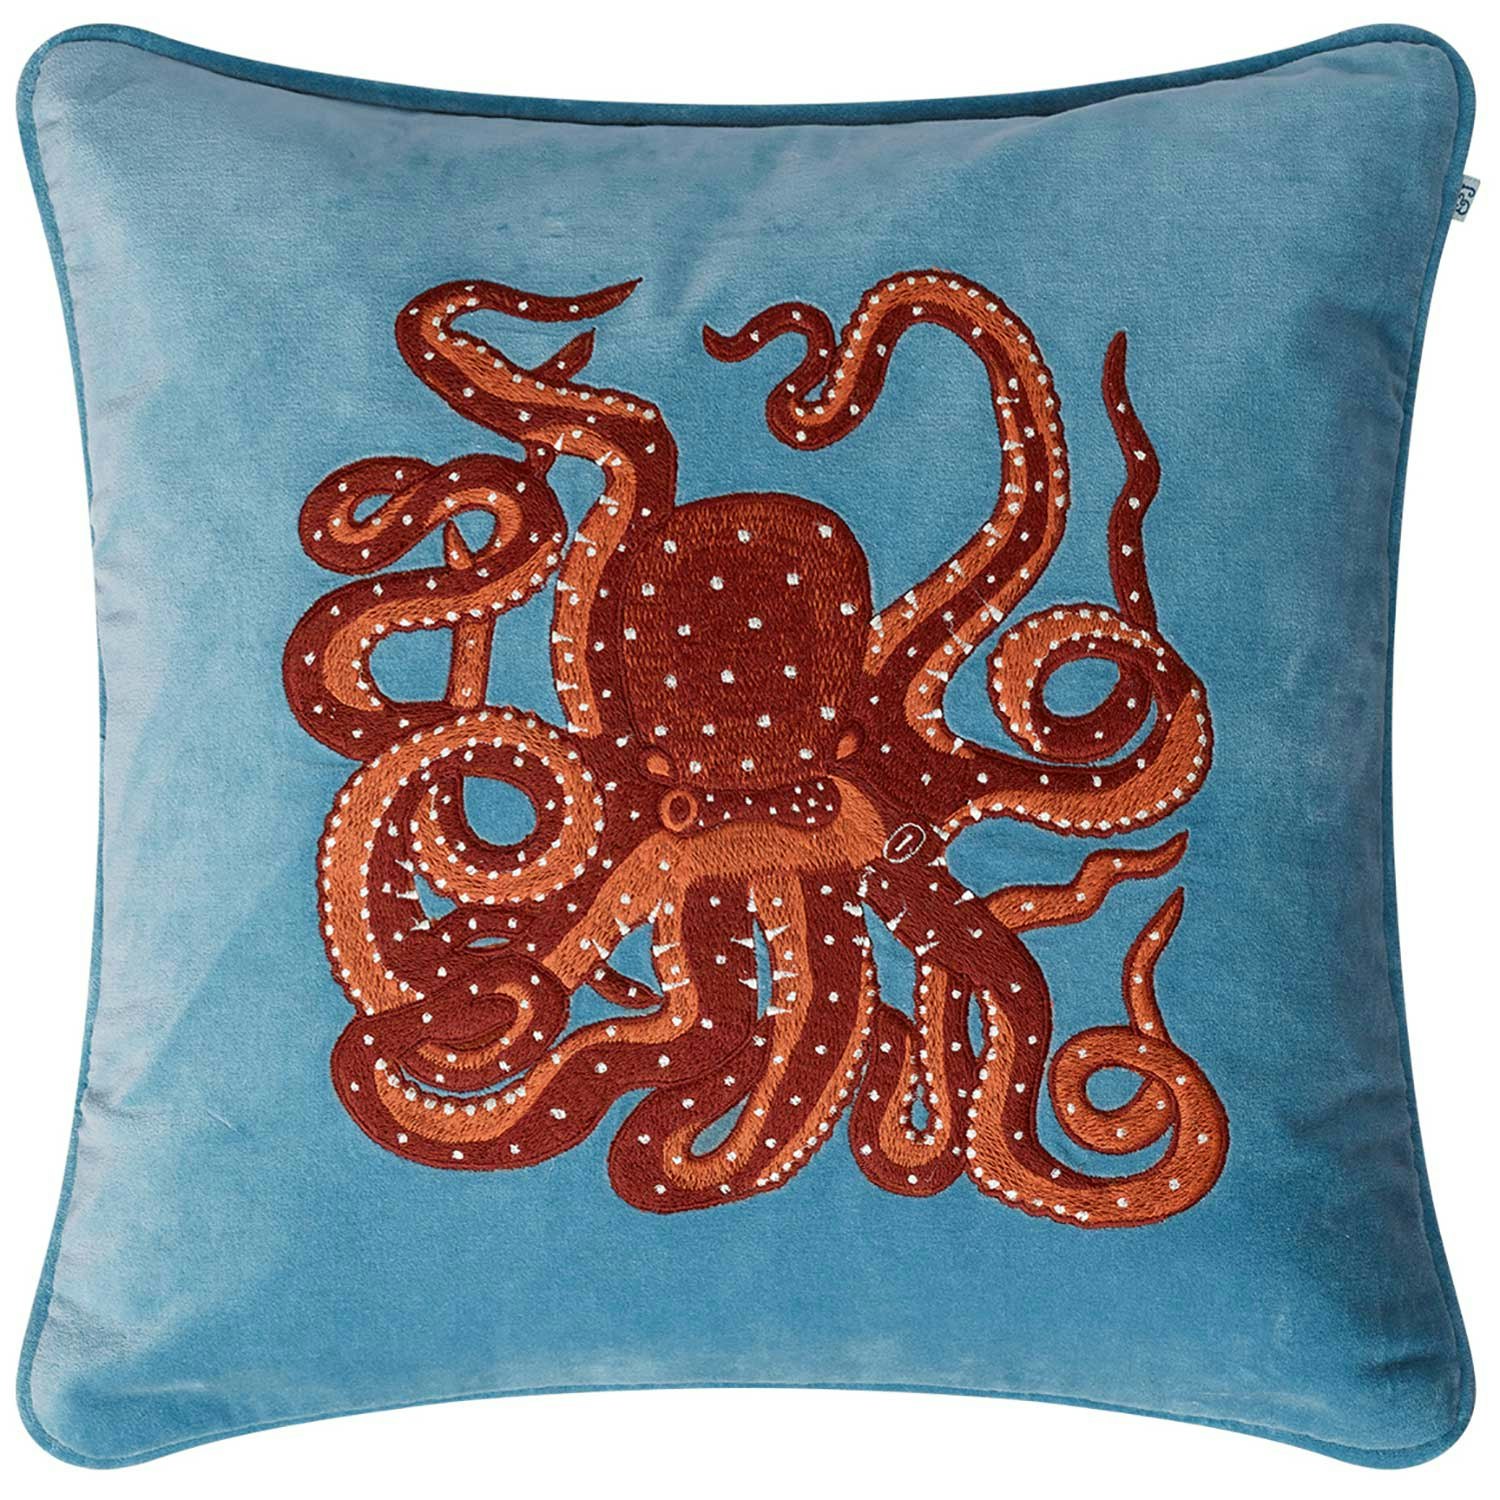 Octopus Cushion Cover 50x50 cm 